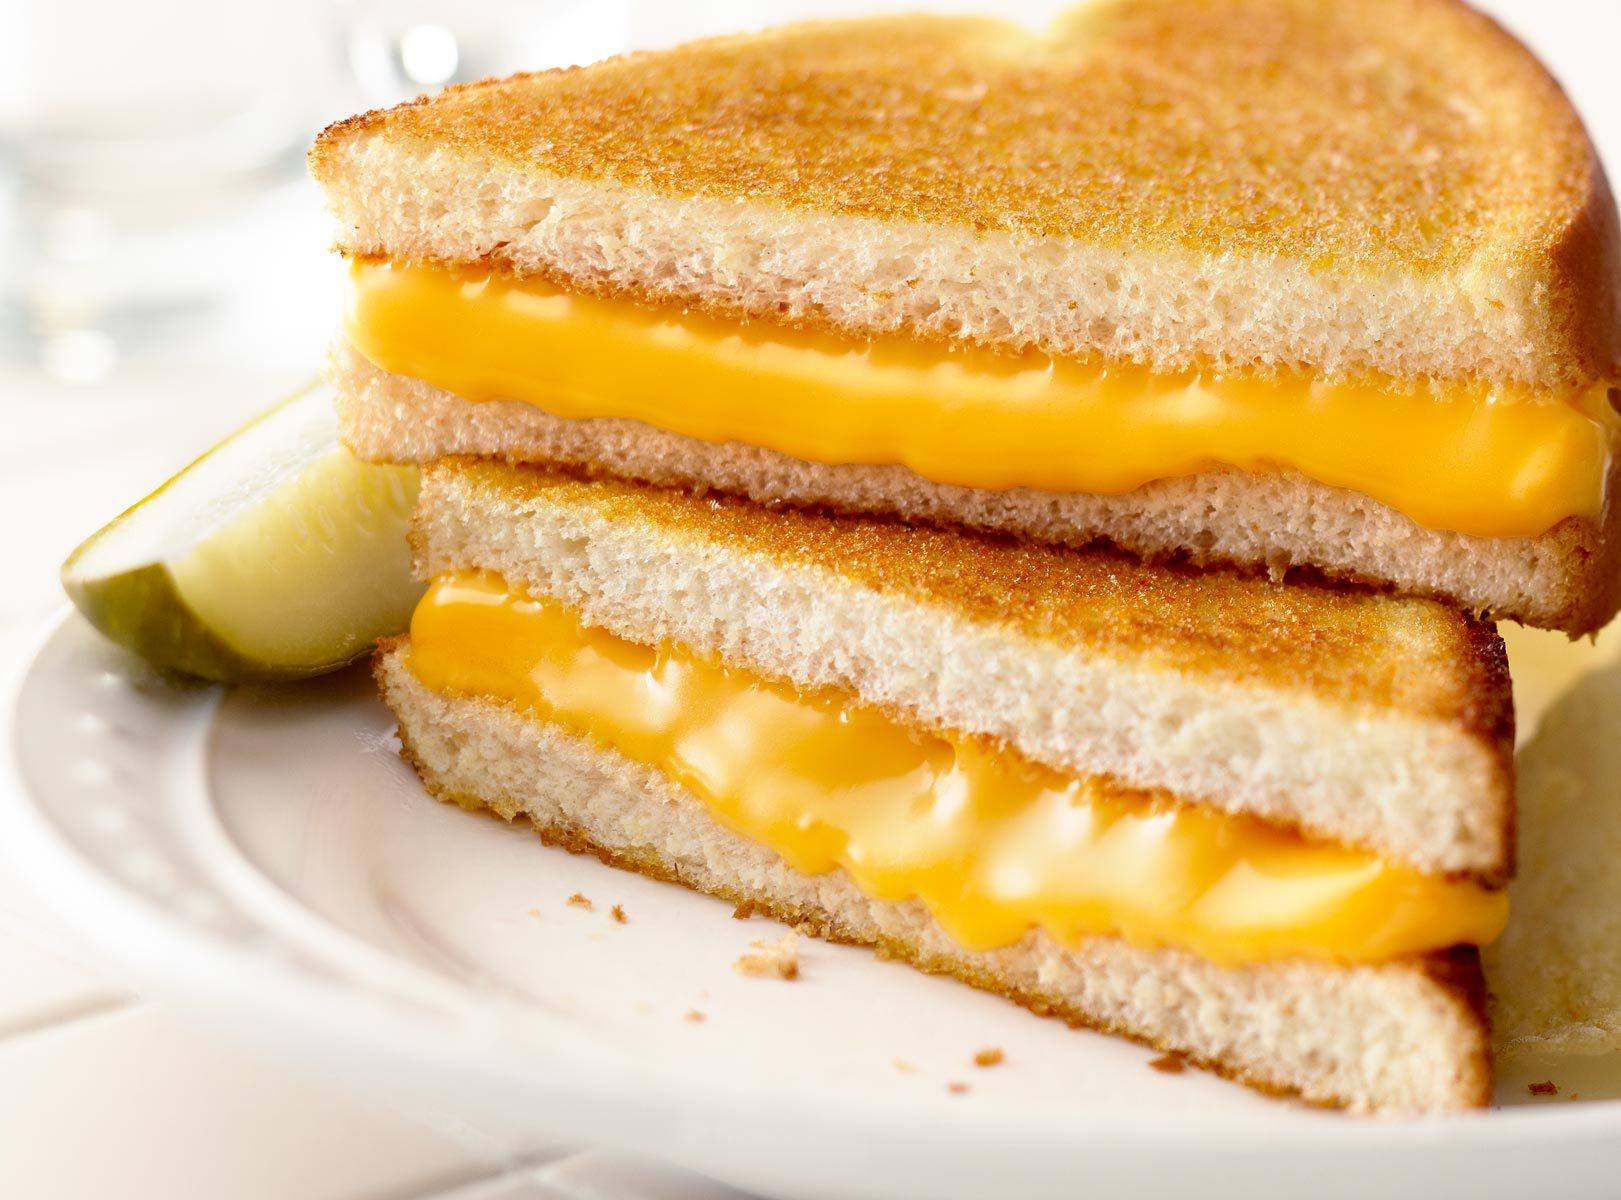 8057-yellow-cheese-sandwich-1.jpg